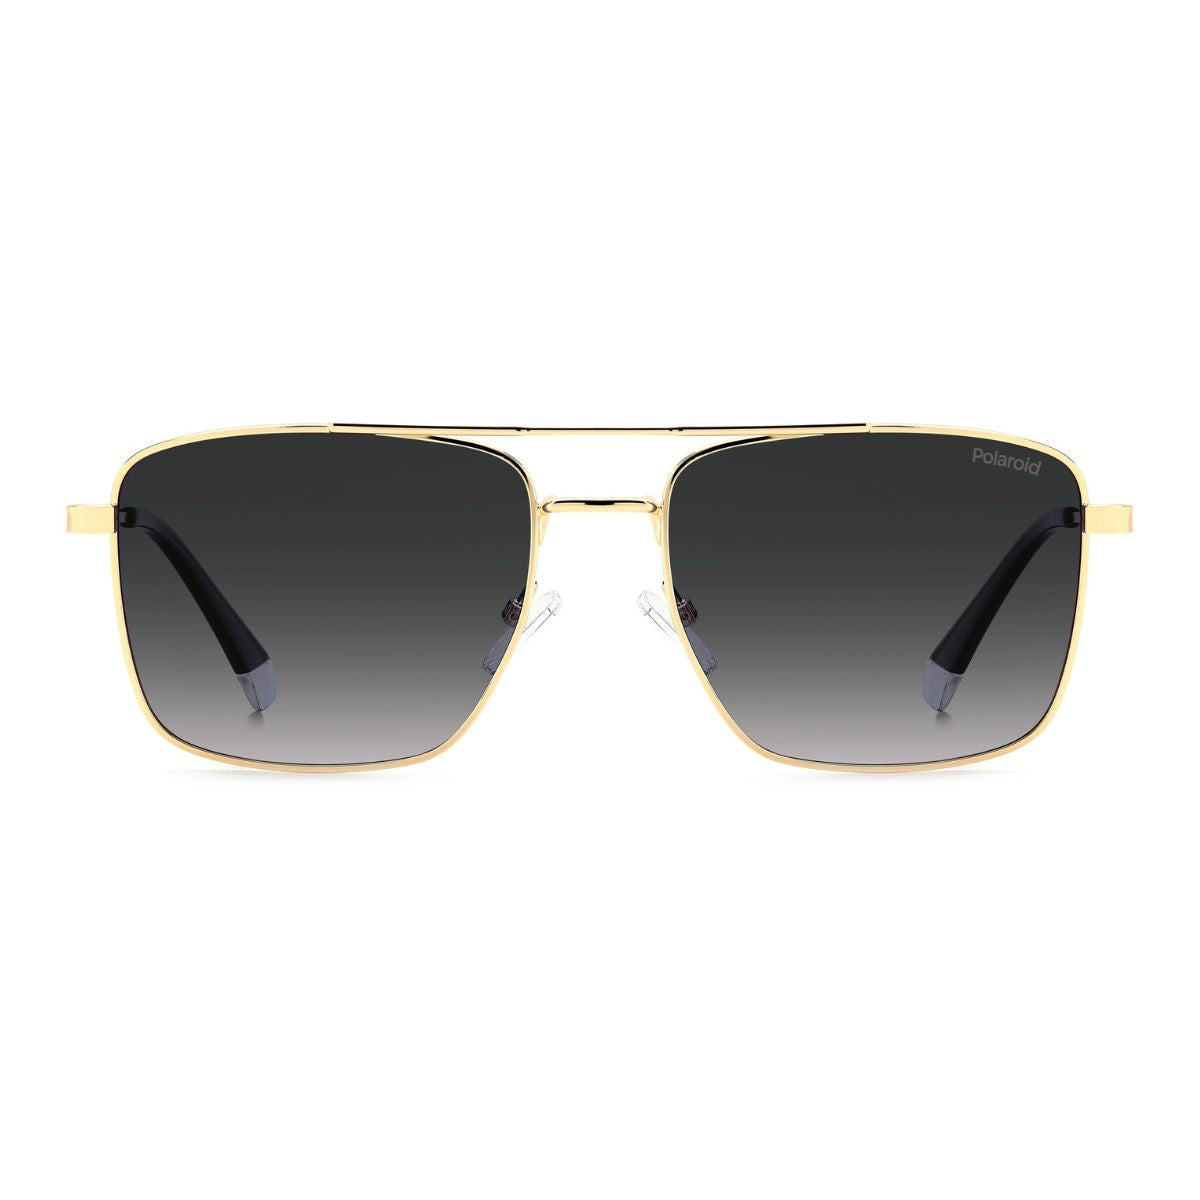 "Shop Latest Metal Square Polarized Sunglasses For Mens At Optorium"